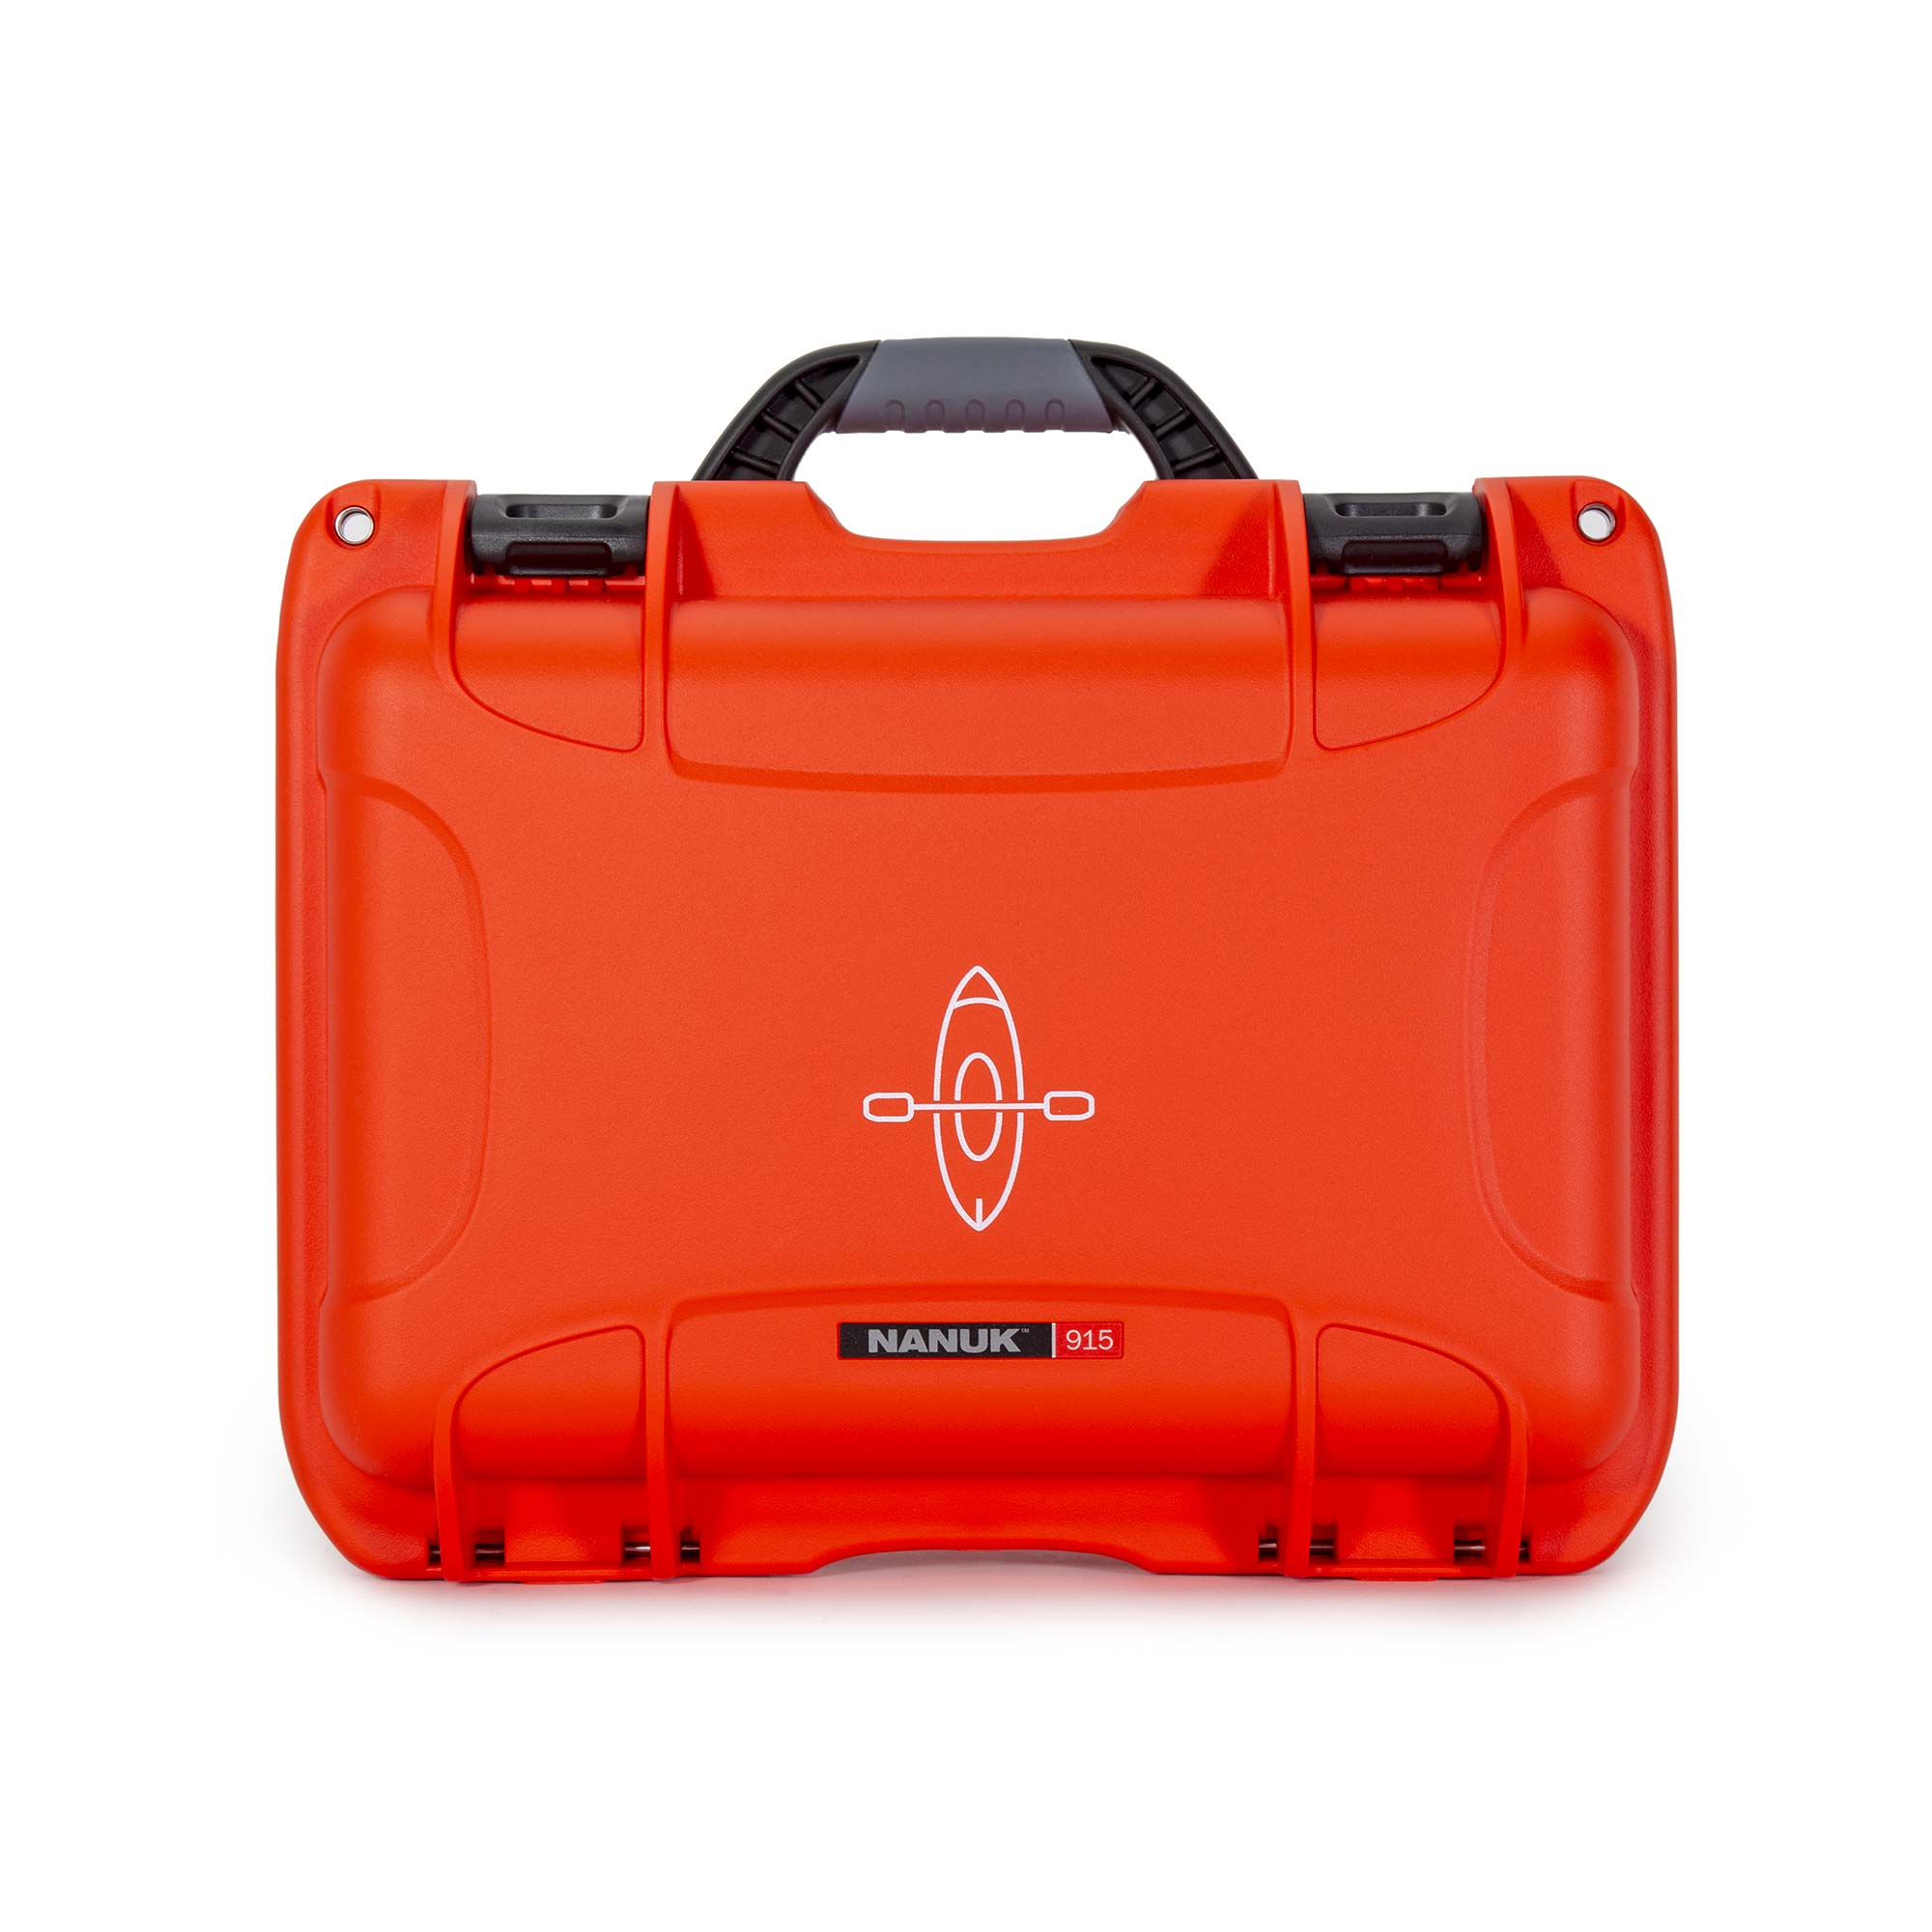 NANUK 915 Kajak valise Official NANUK Protective valise Online Store - Wasserdicht and Unverwüstlich Hart valise